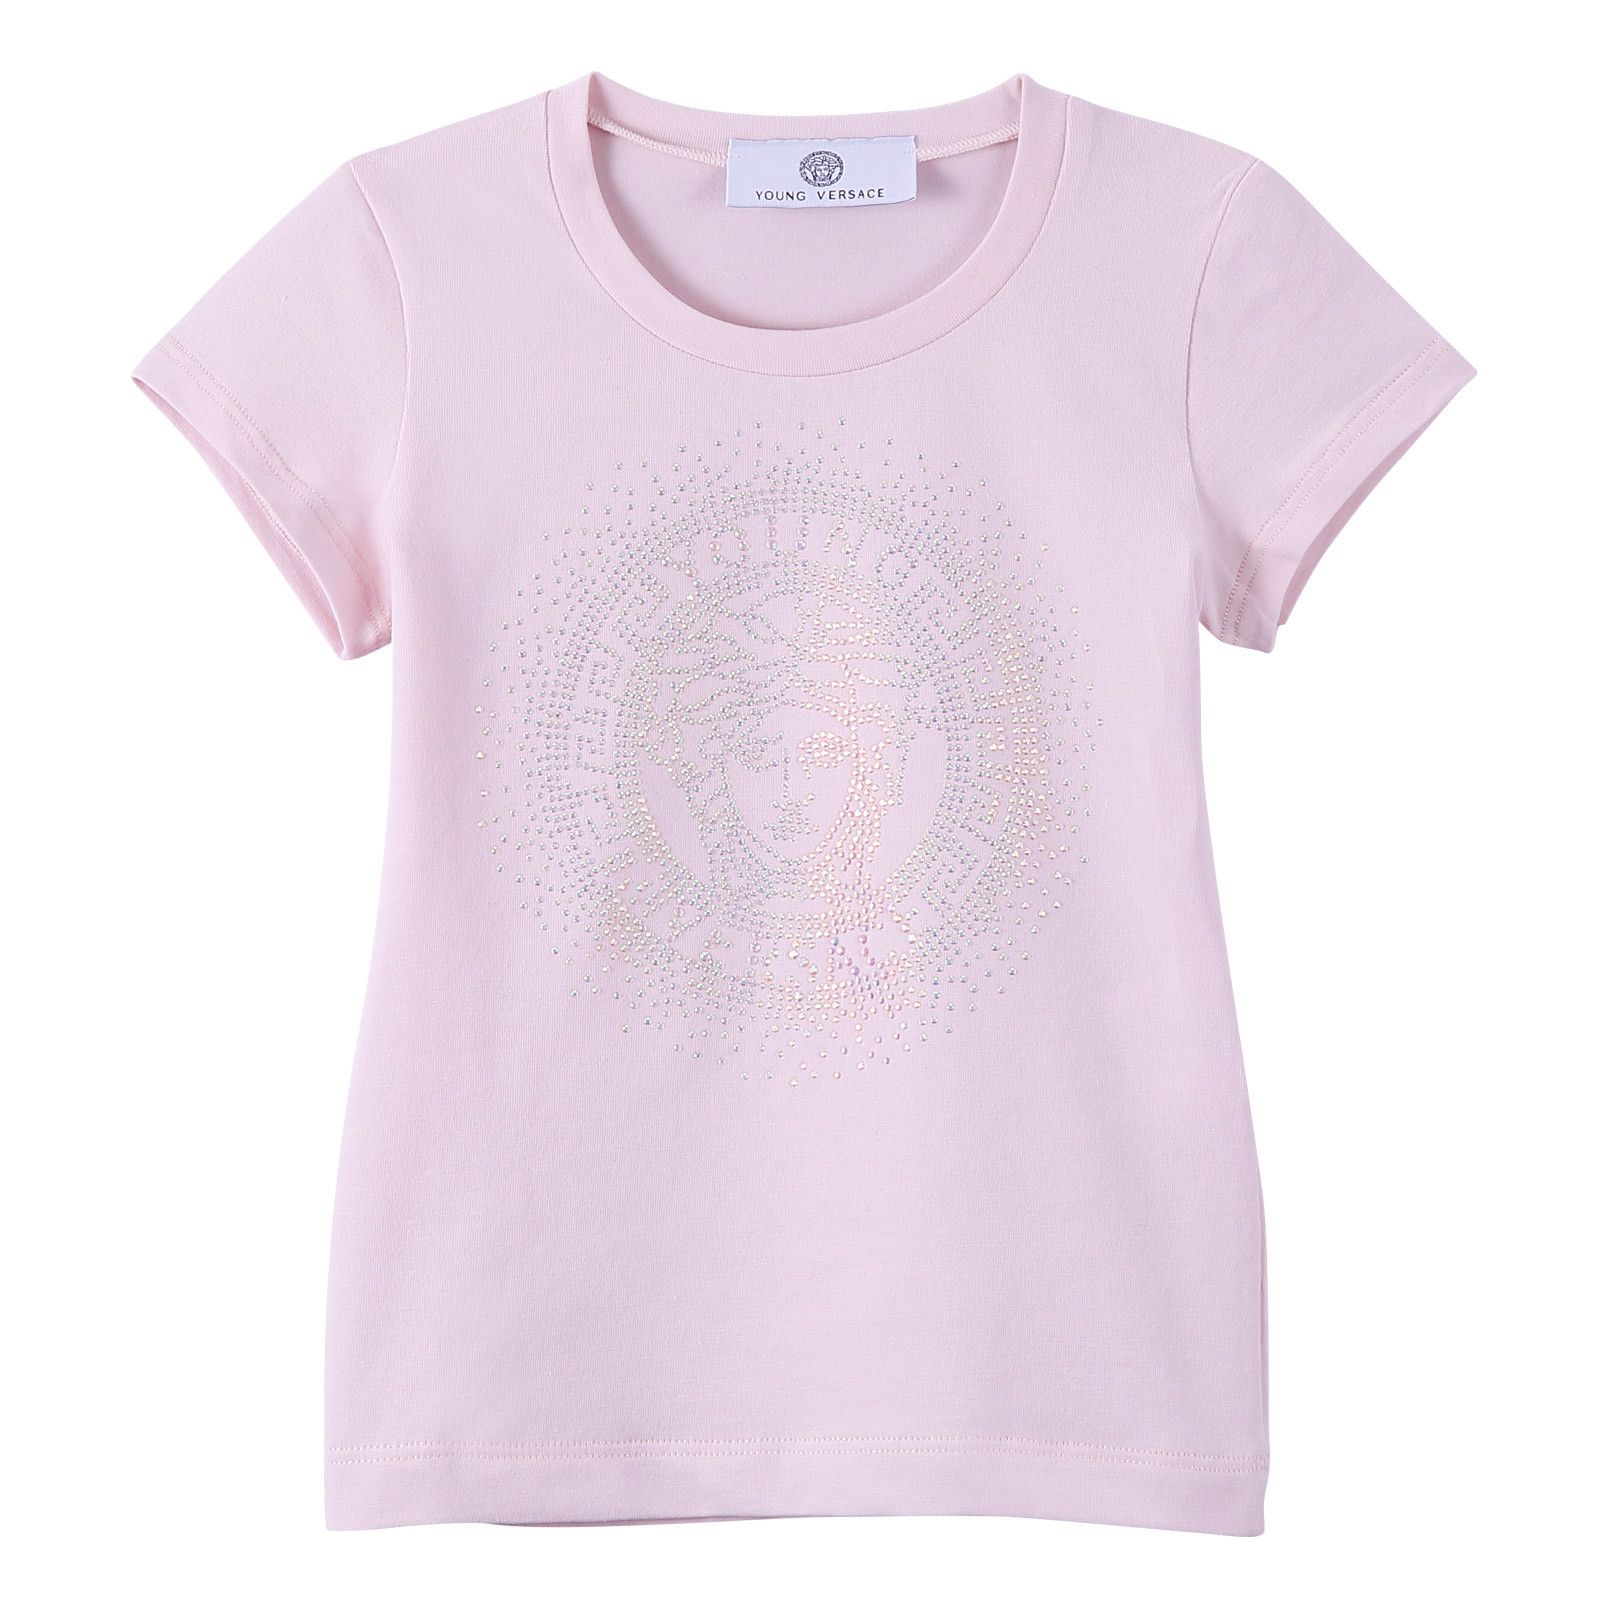 Girls Pink Cotton T-Shirt With Gold Rhinestone Logo - CÉMAROSE | Children's Fashion Store - 1